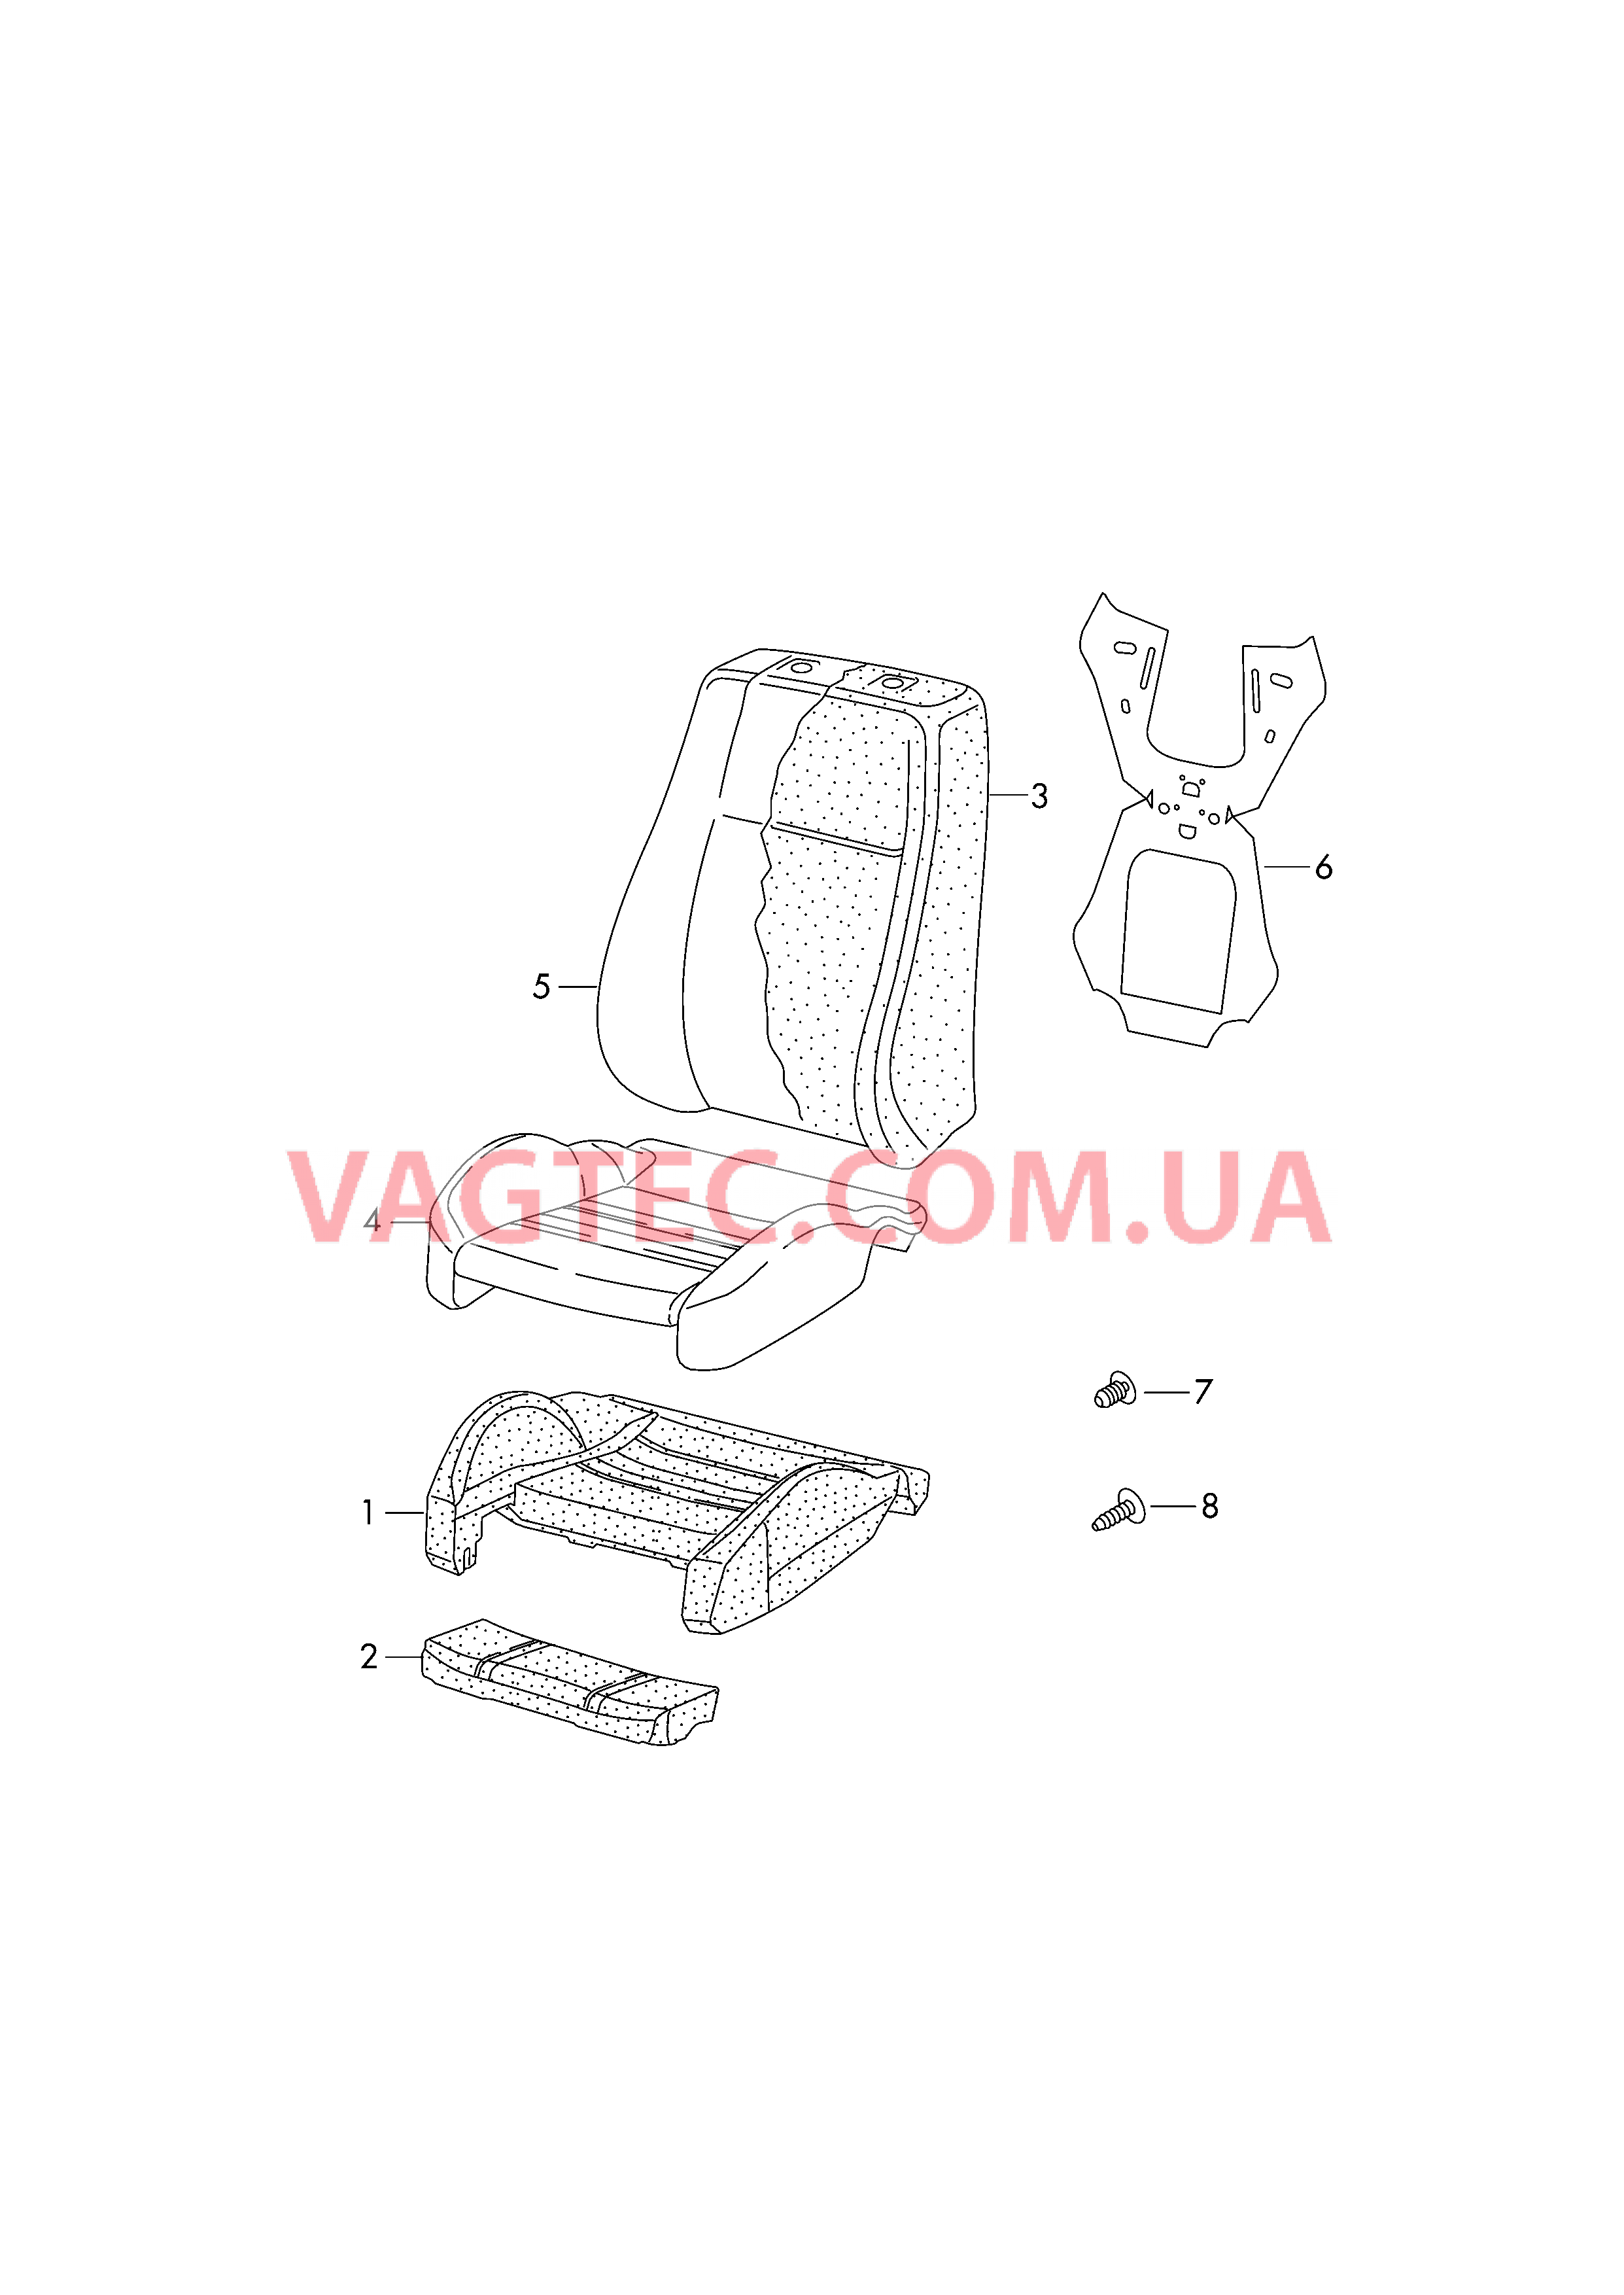 Подушка сиденья Набивка спинки Обивка подушки и спинки сиден.  для AUDI Q5 2019